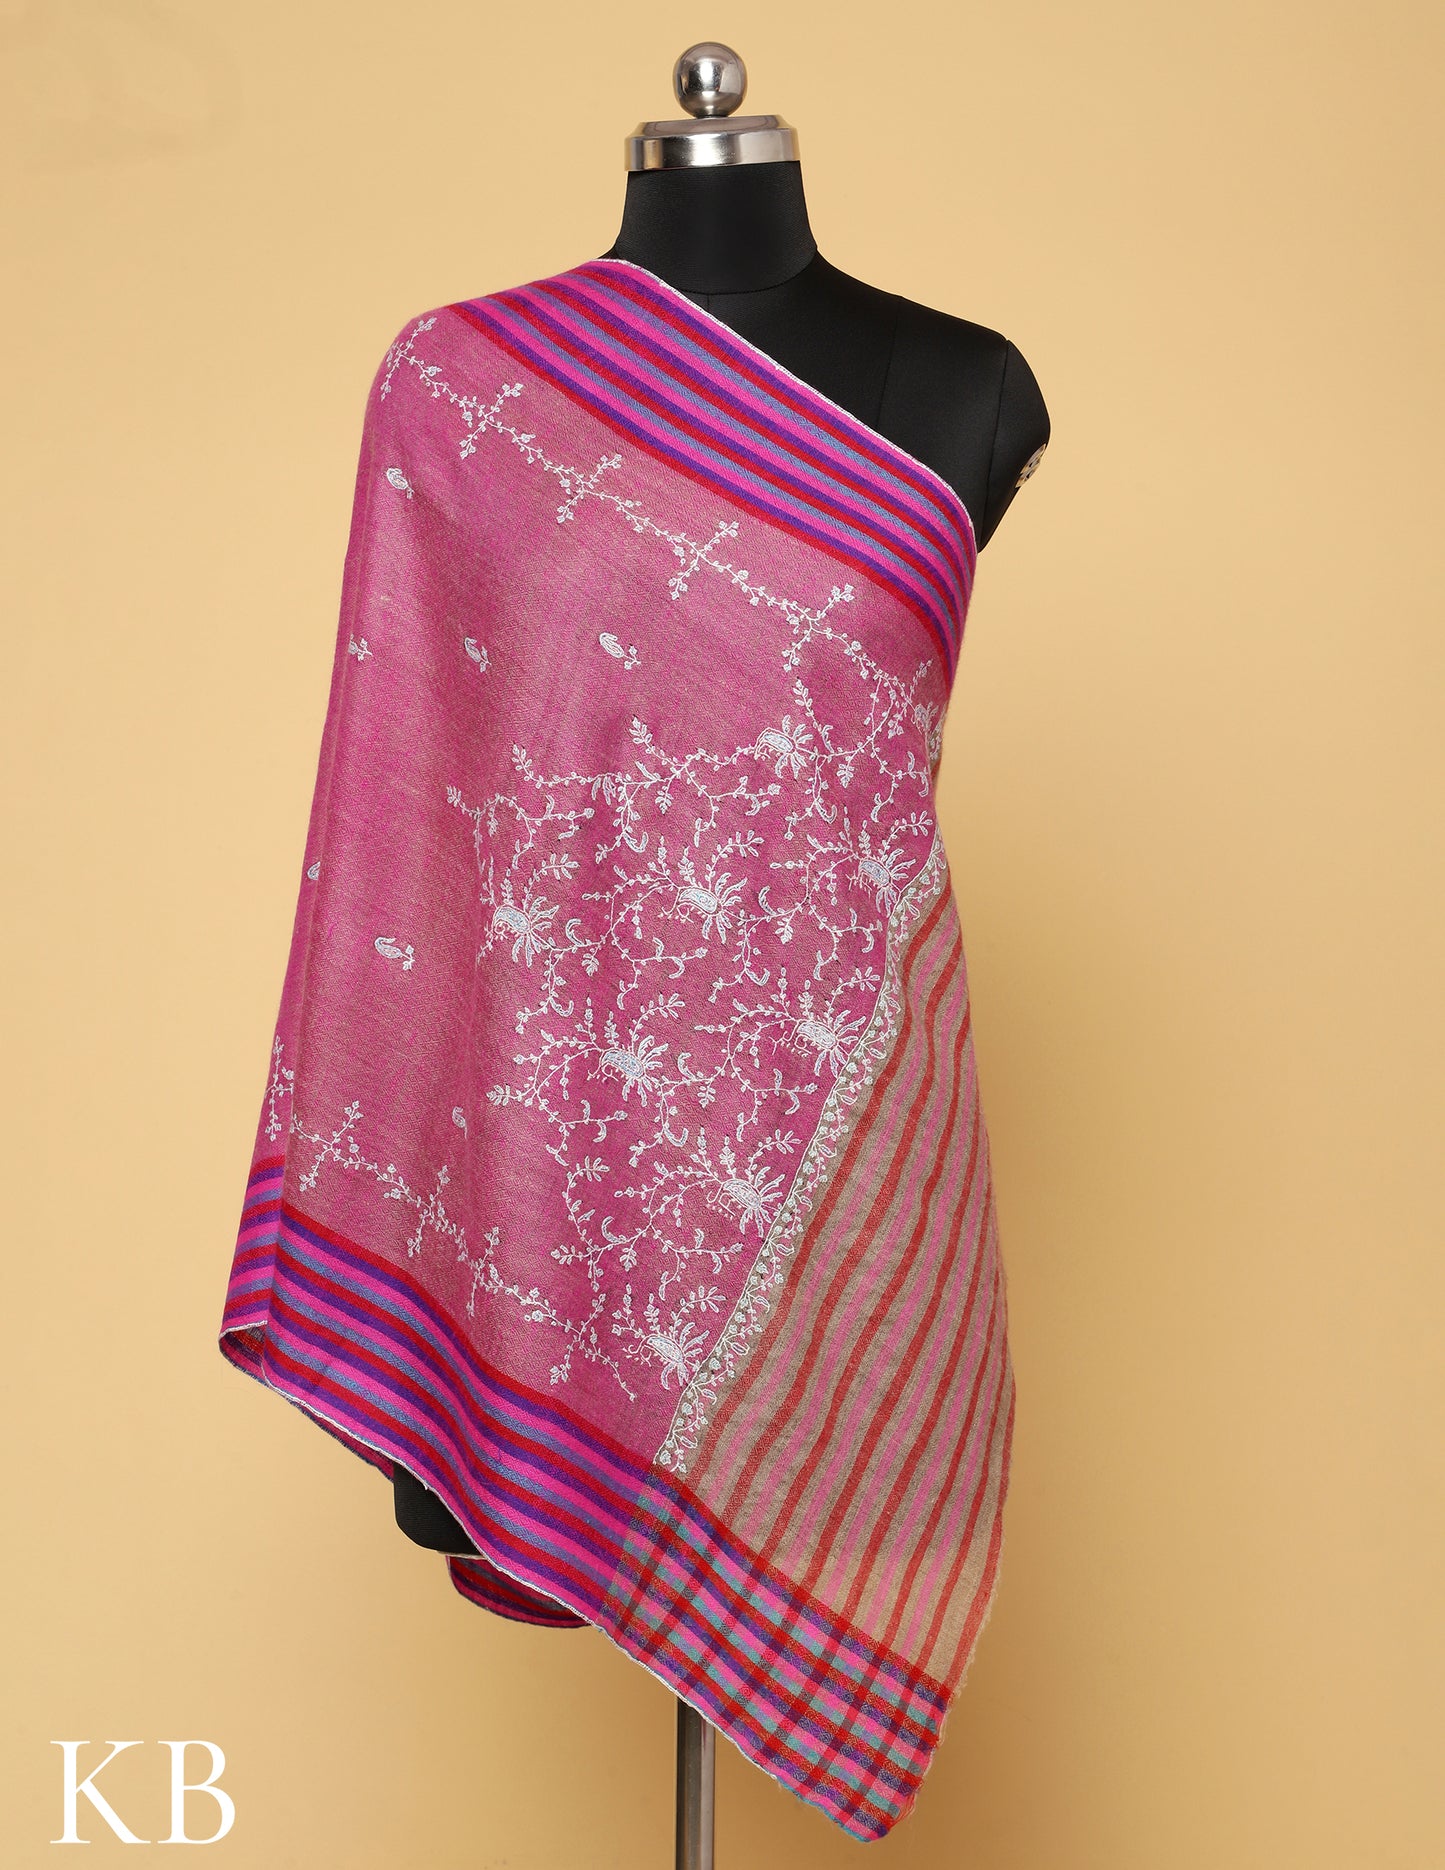 Puce Pink Sozni Embroidered and Striped Palla Pure Pashmina Stole - Kashmir Box